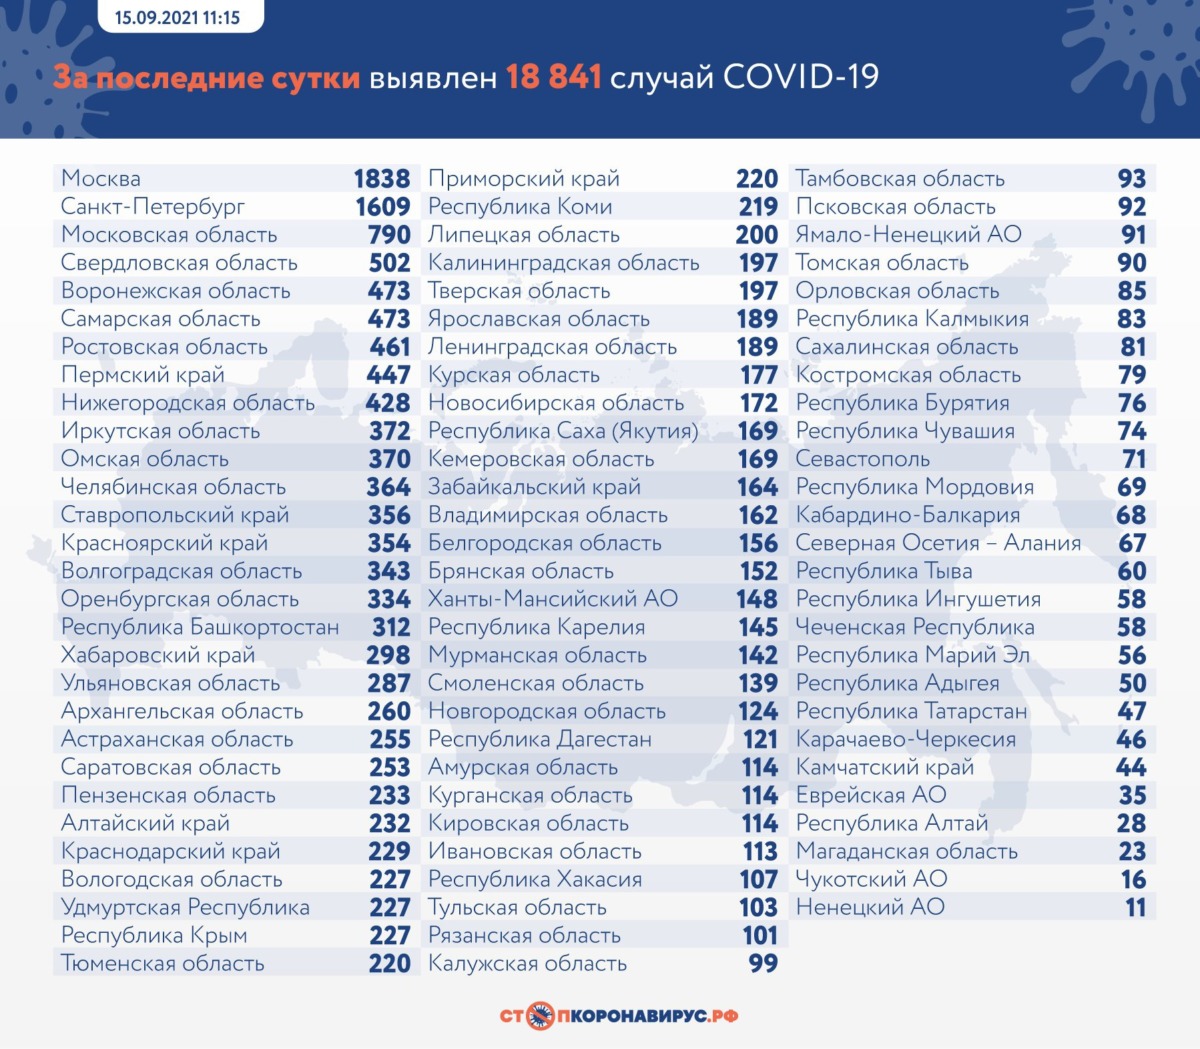 Оперативная статистика по коронавирусу в России на 15 сентября